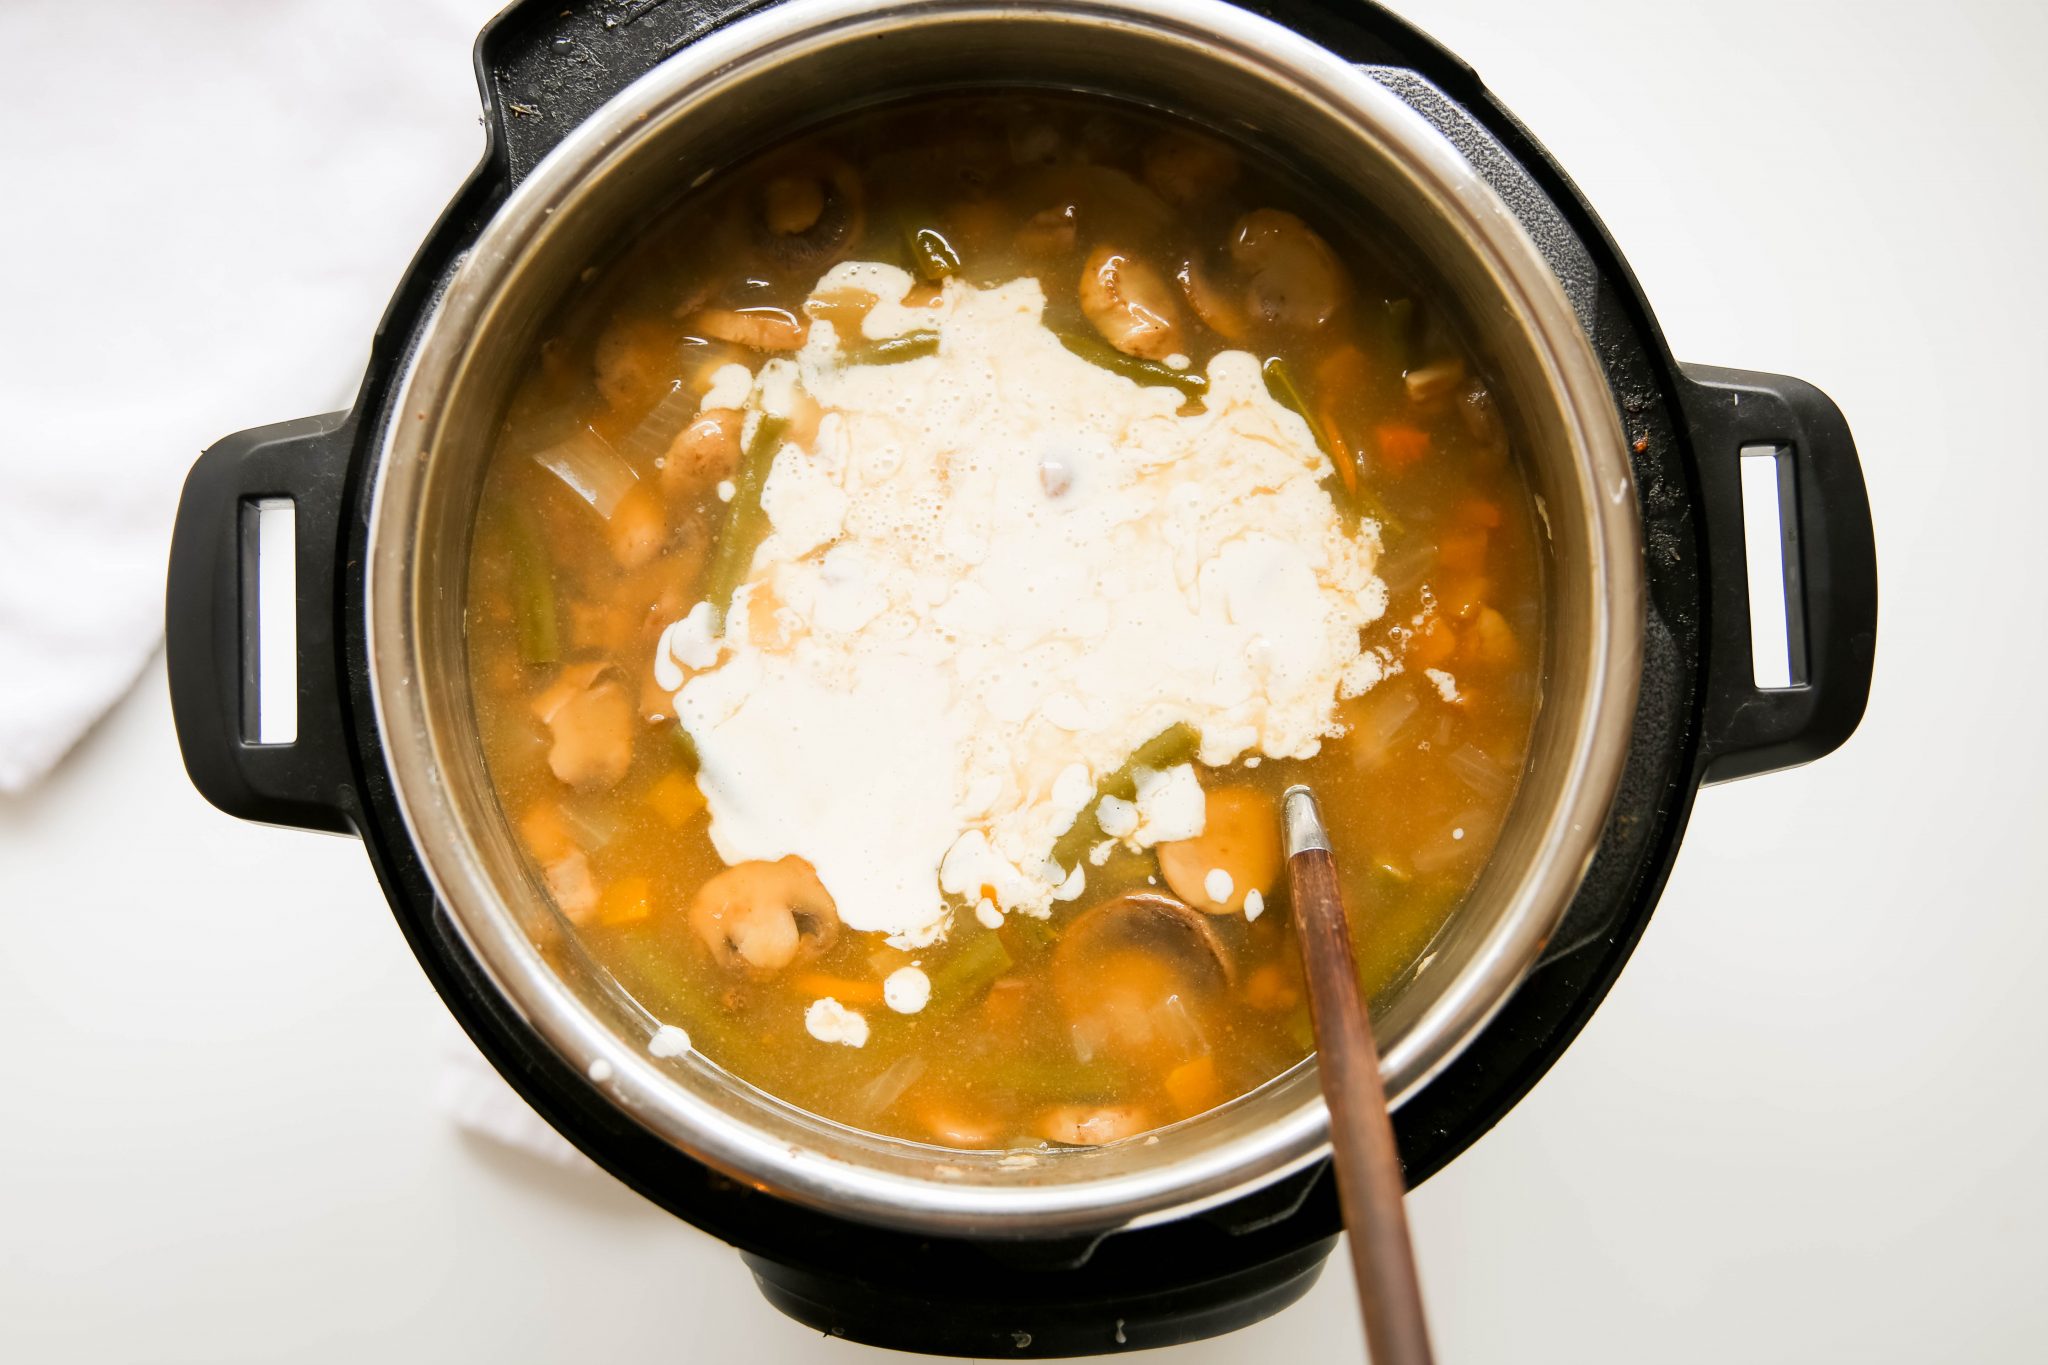 Wild rice soup recipe - Dr. Pingel